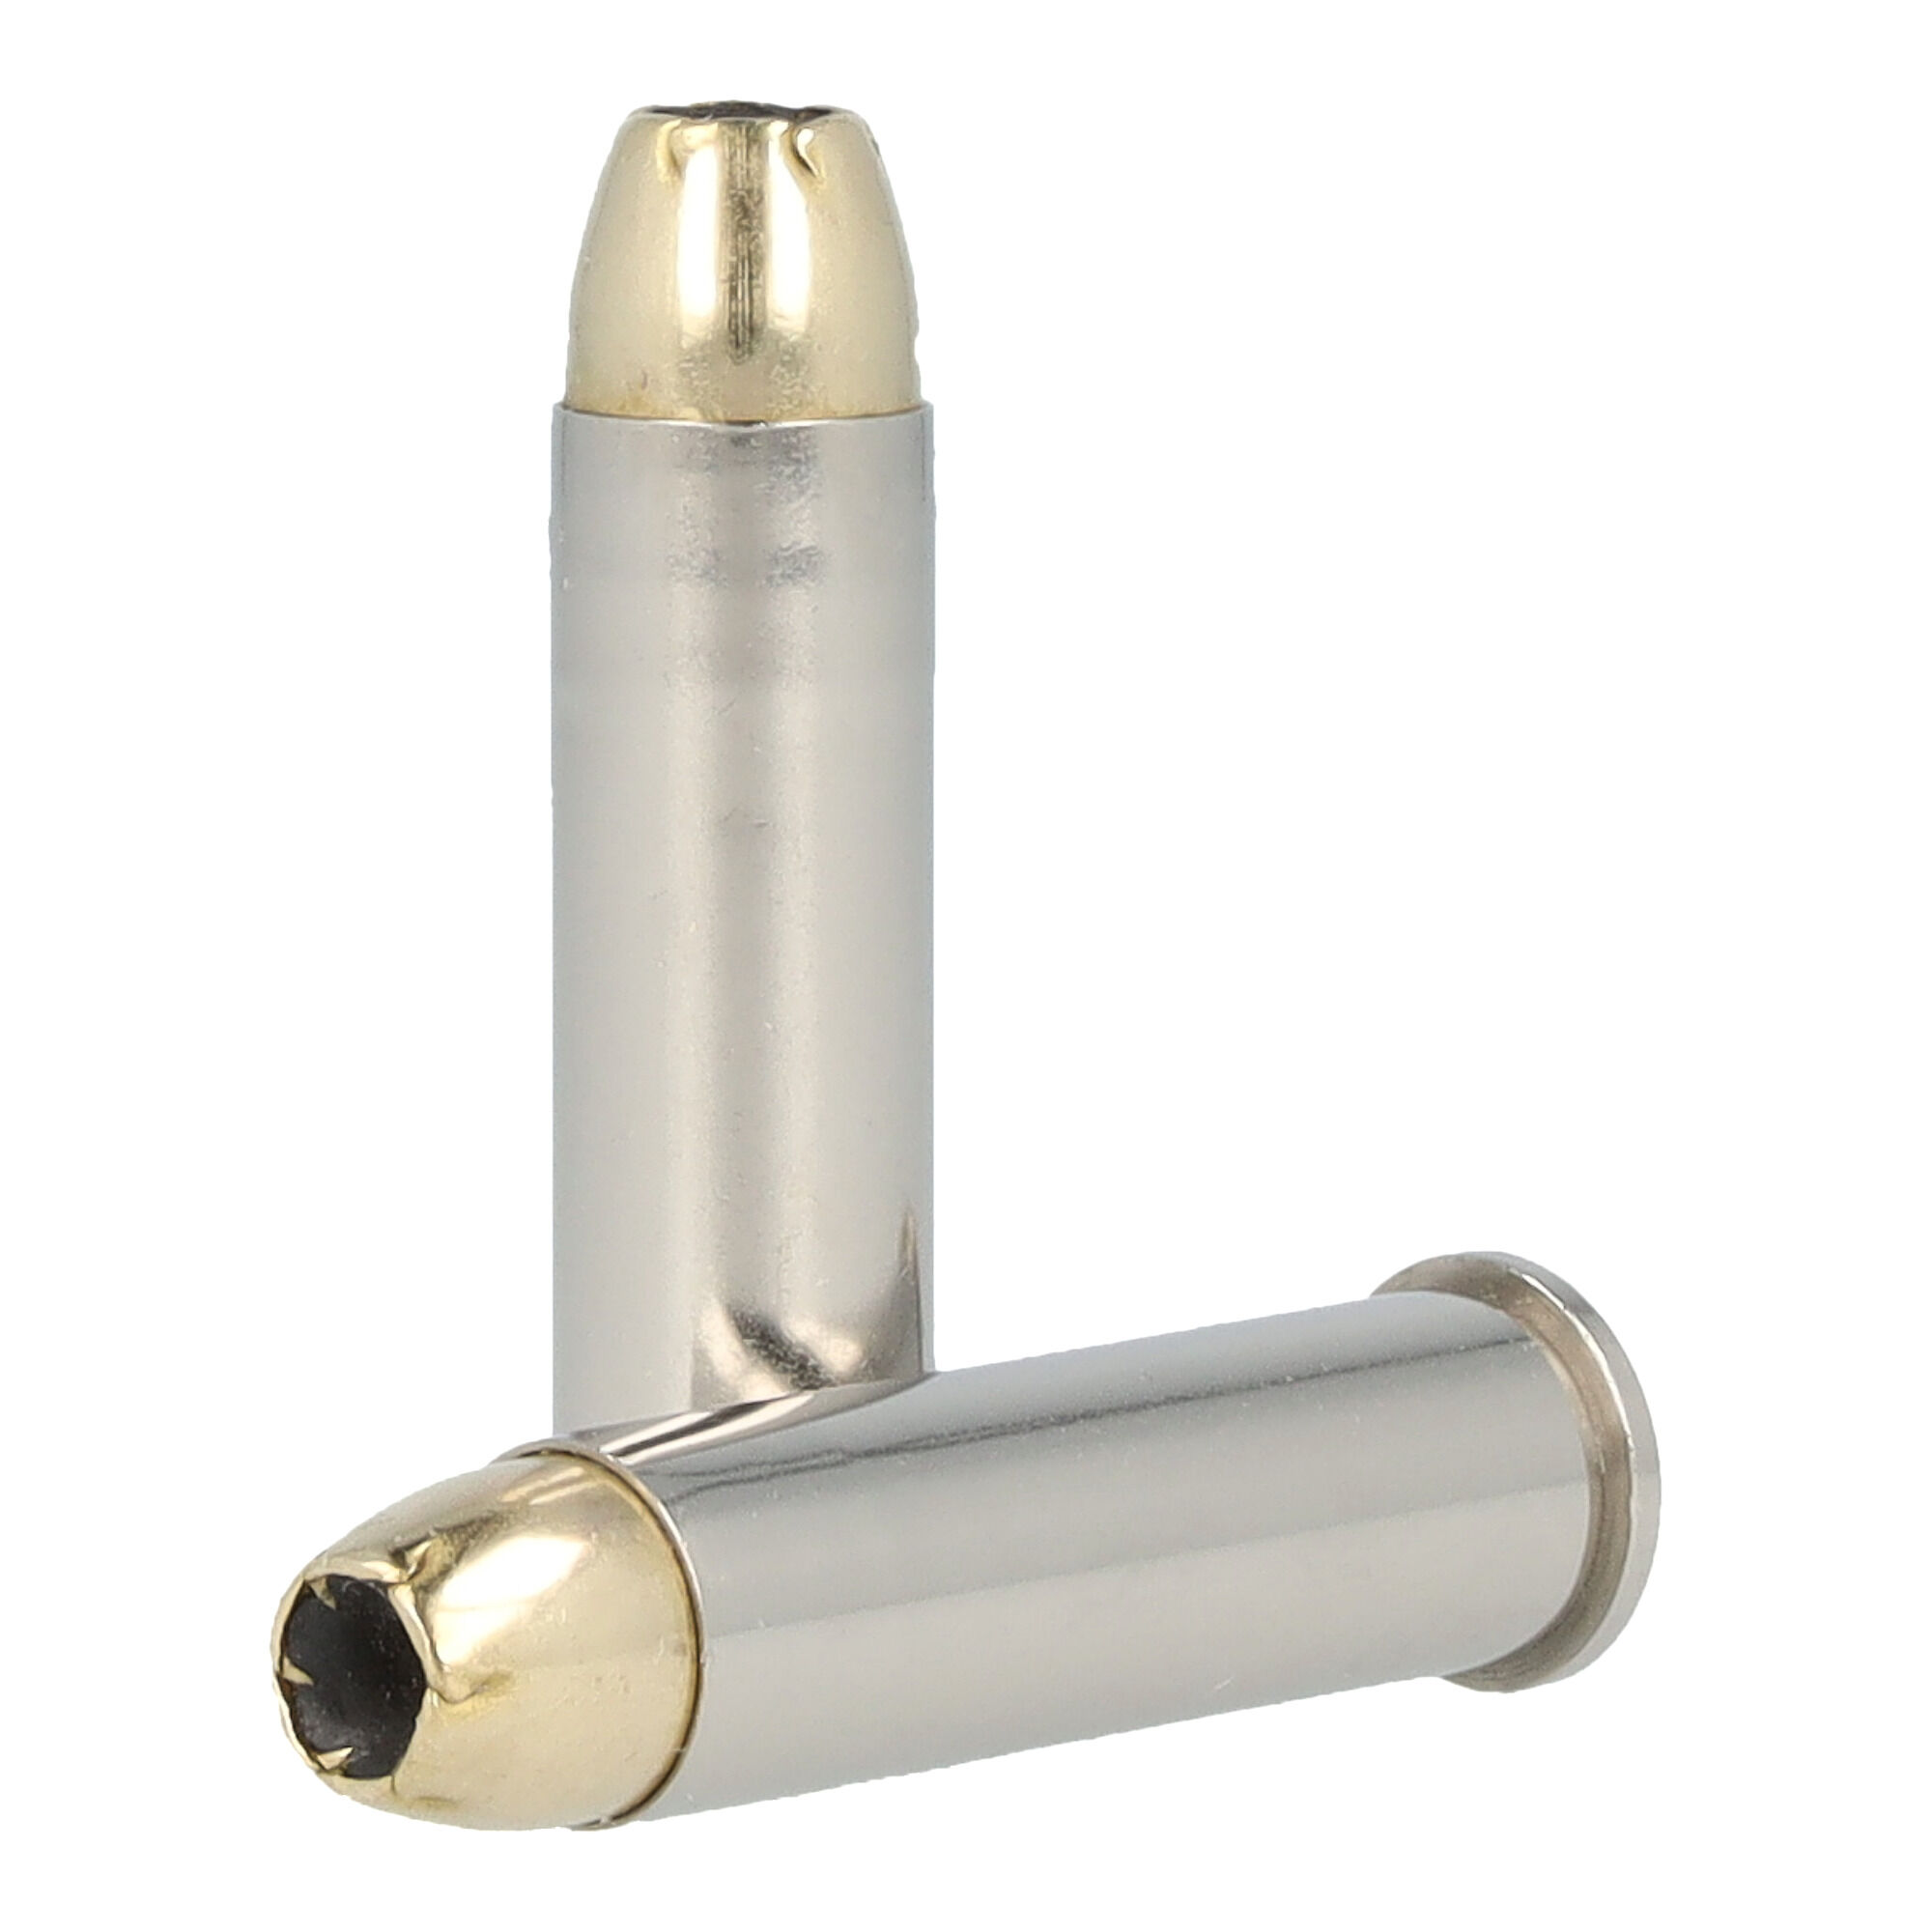 Buy Ultimate Defense Handgun 357 Magnum 28920 for USD 30.39 